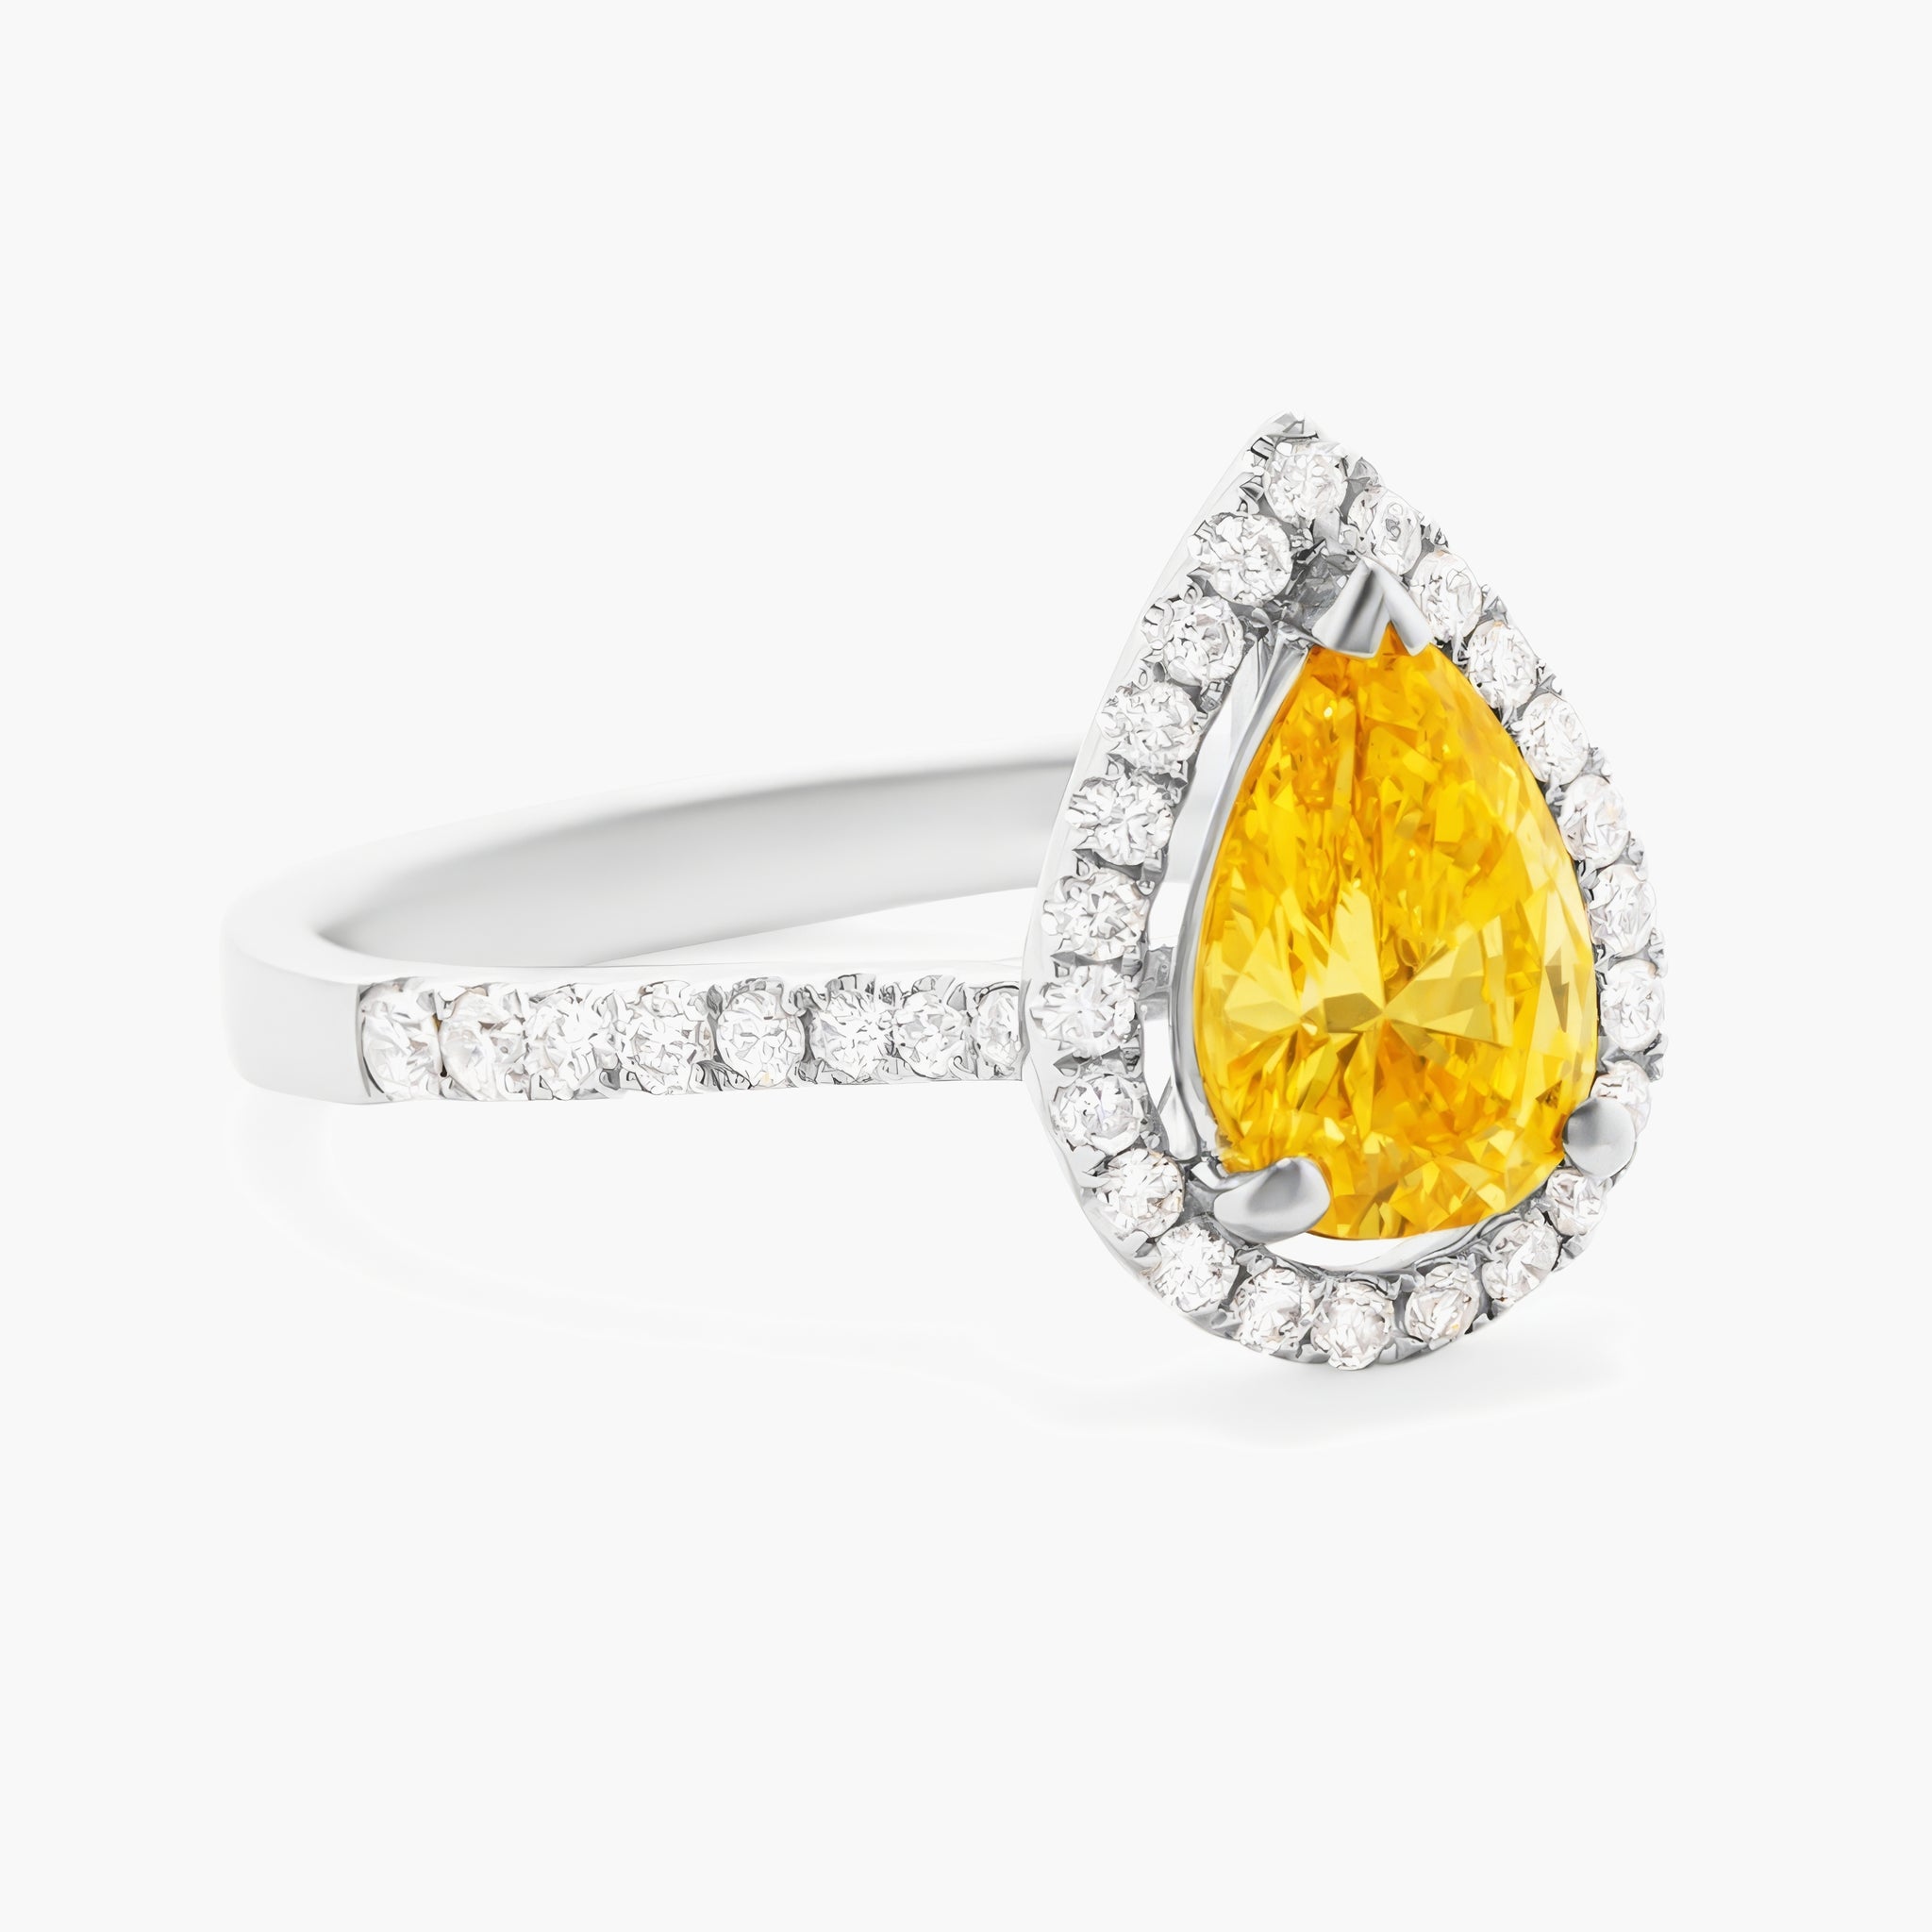 Fancy yellow pearshape diamond ring